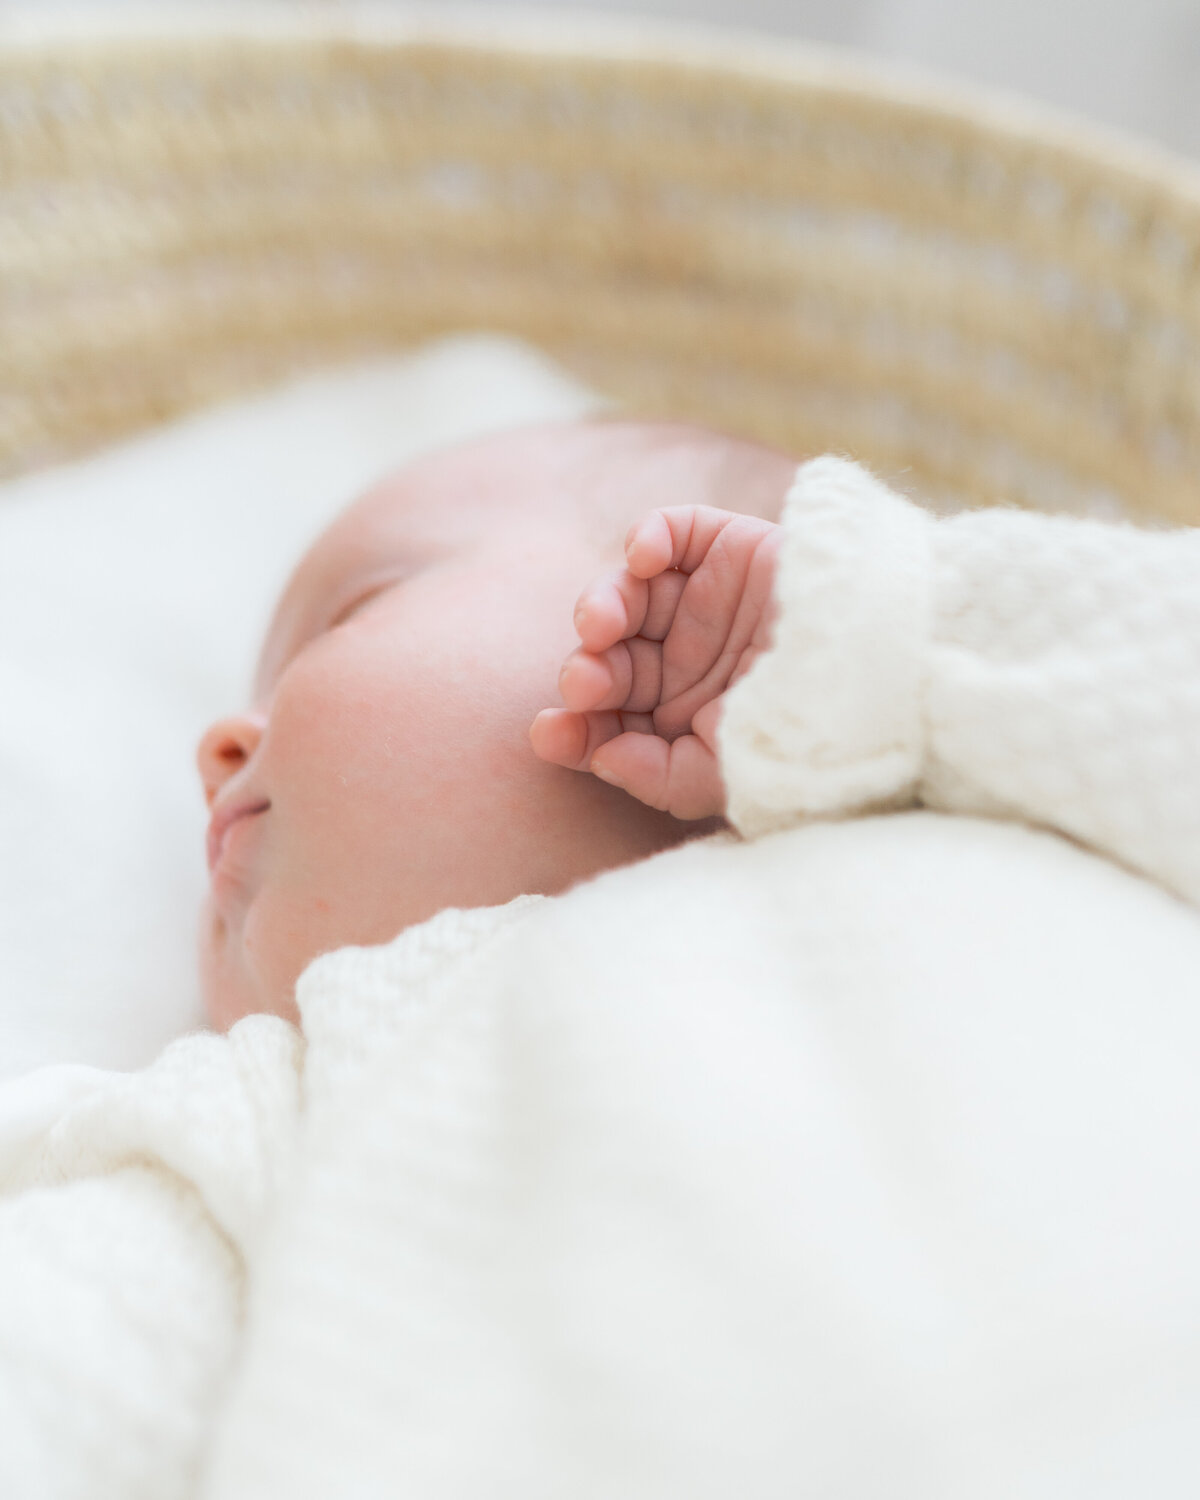 Detail photo of newborn baby's little hand resting on her cheek by Oklahoma City newborn photographer Courtney Cronin